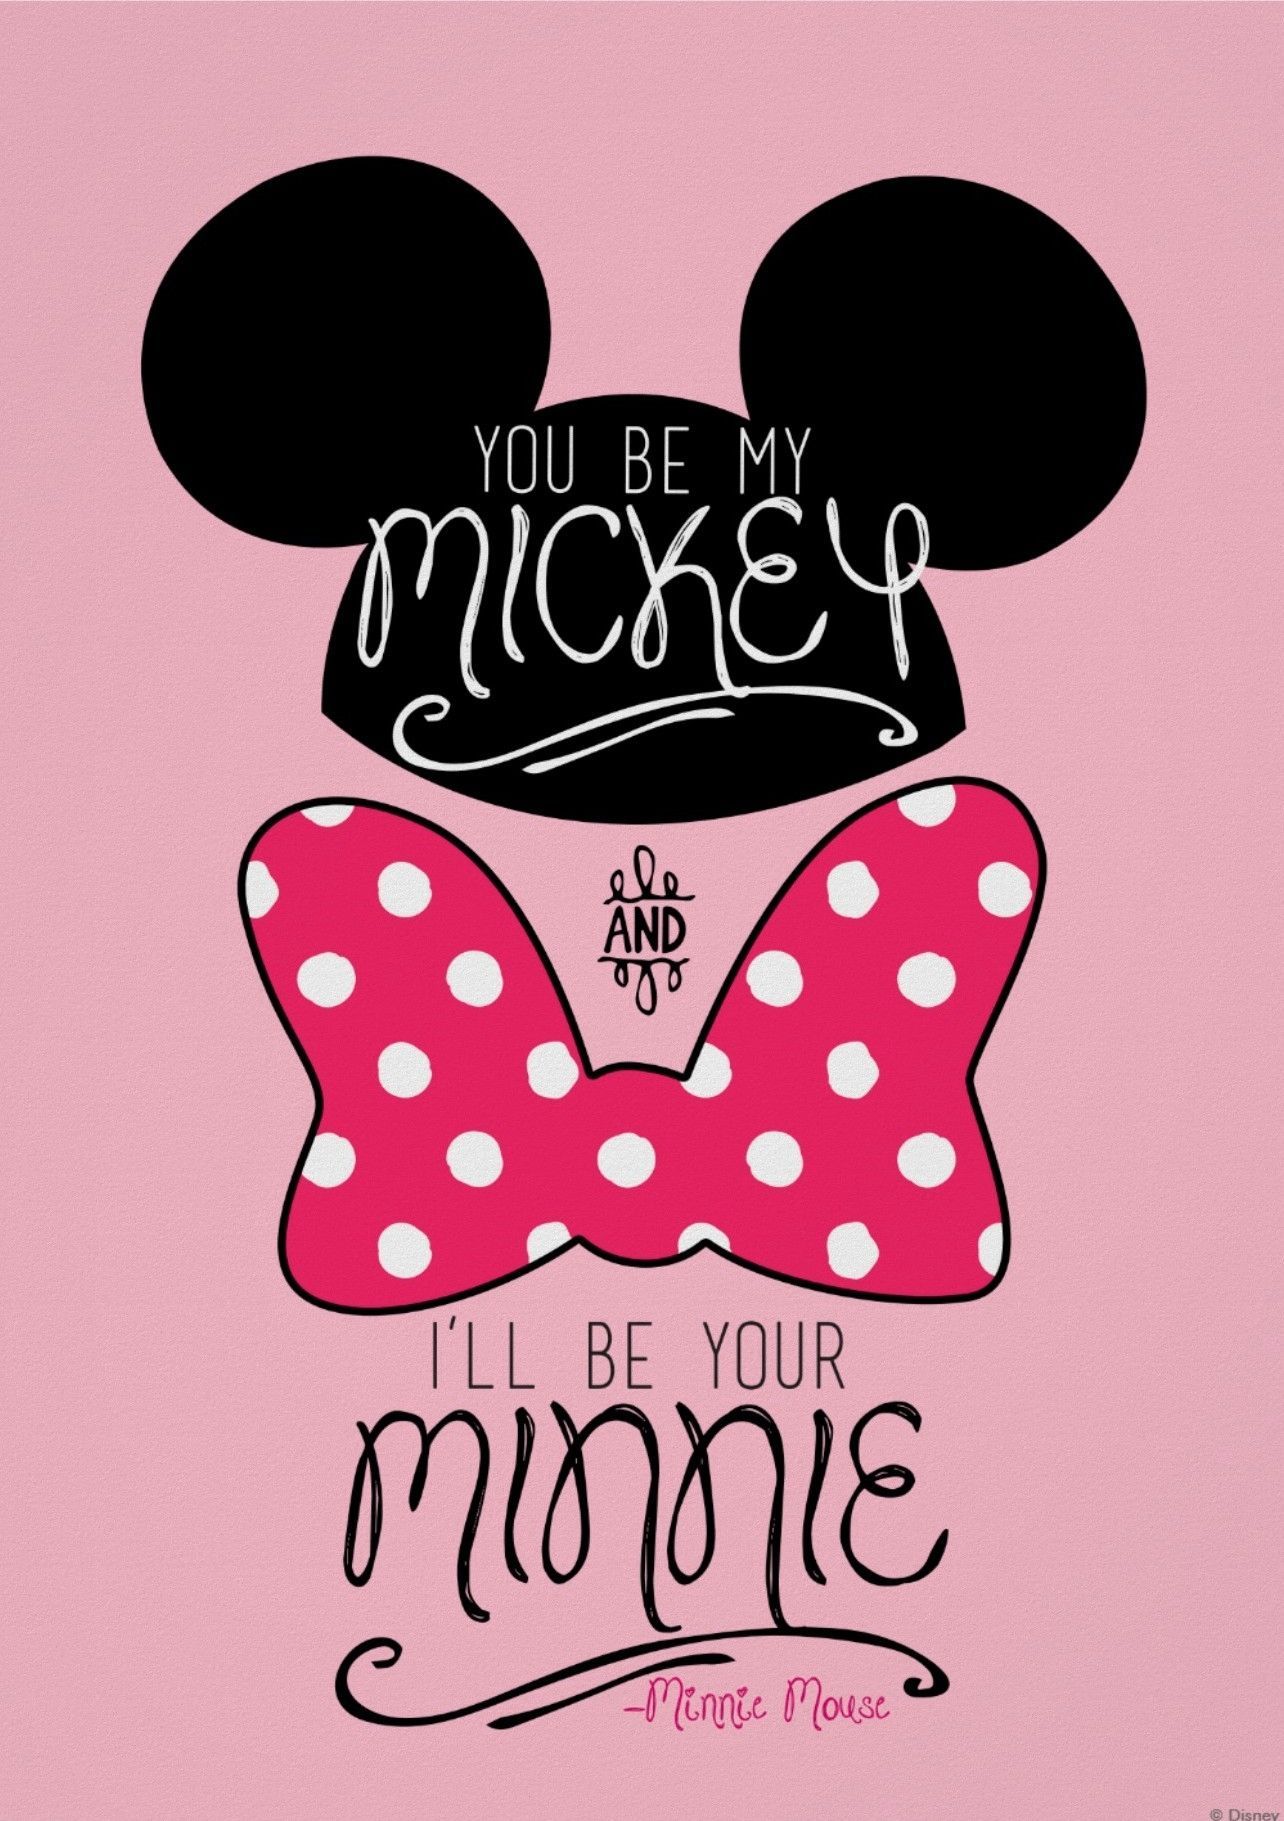 Más de 35 fondos de pantalla de Minnie Mouse - Descarga